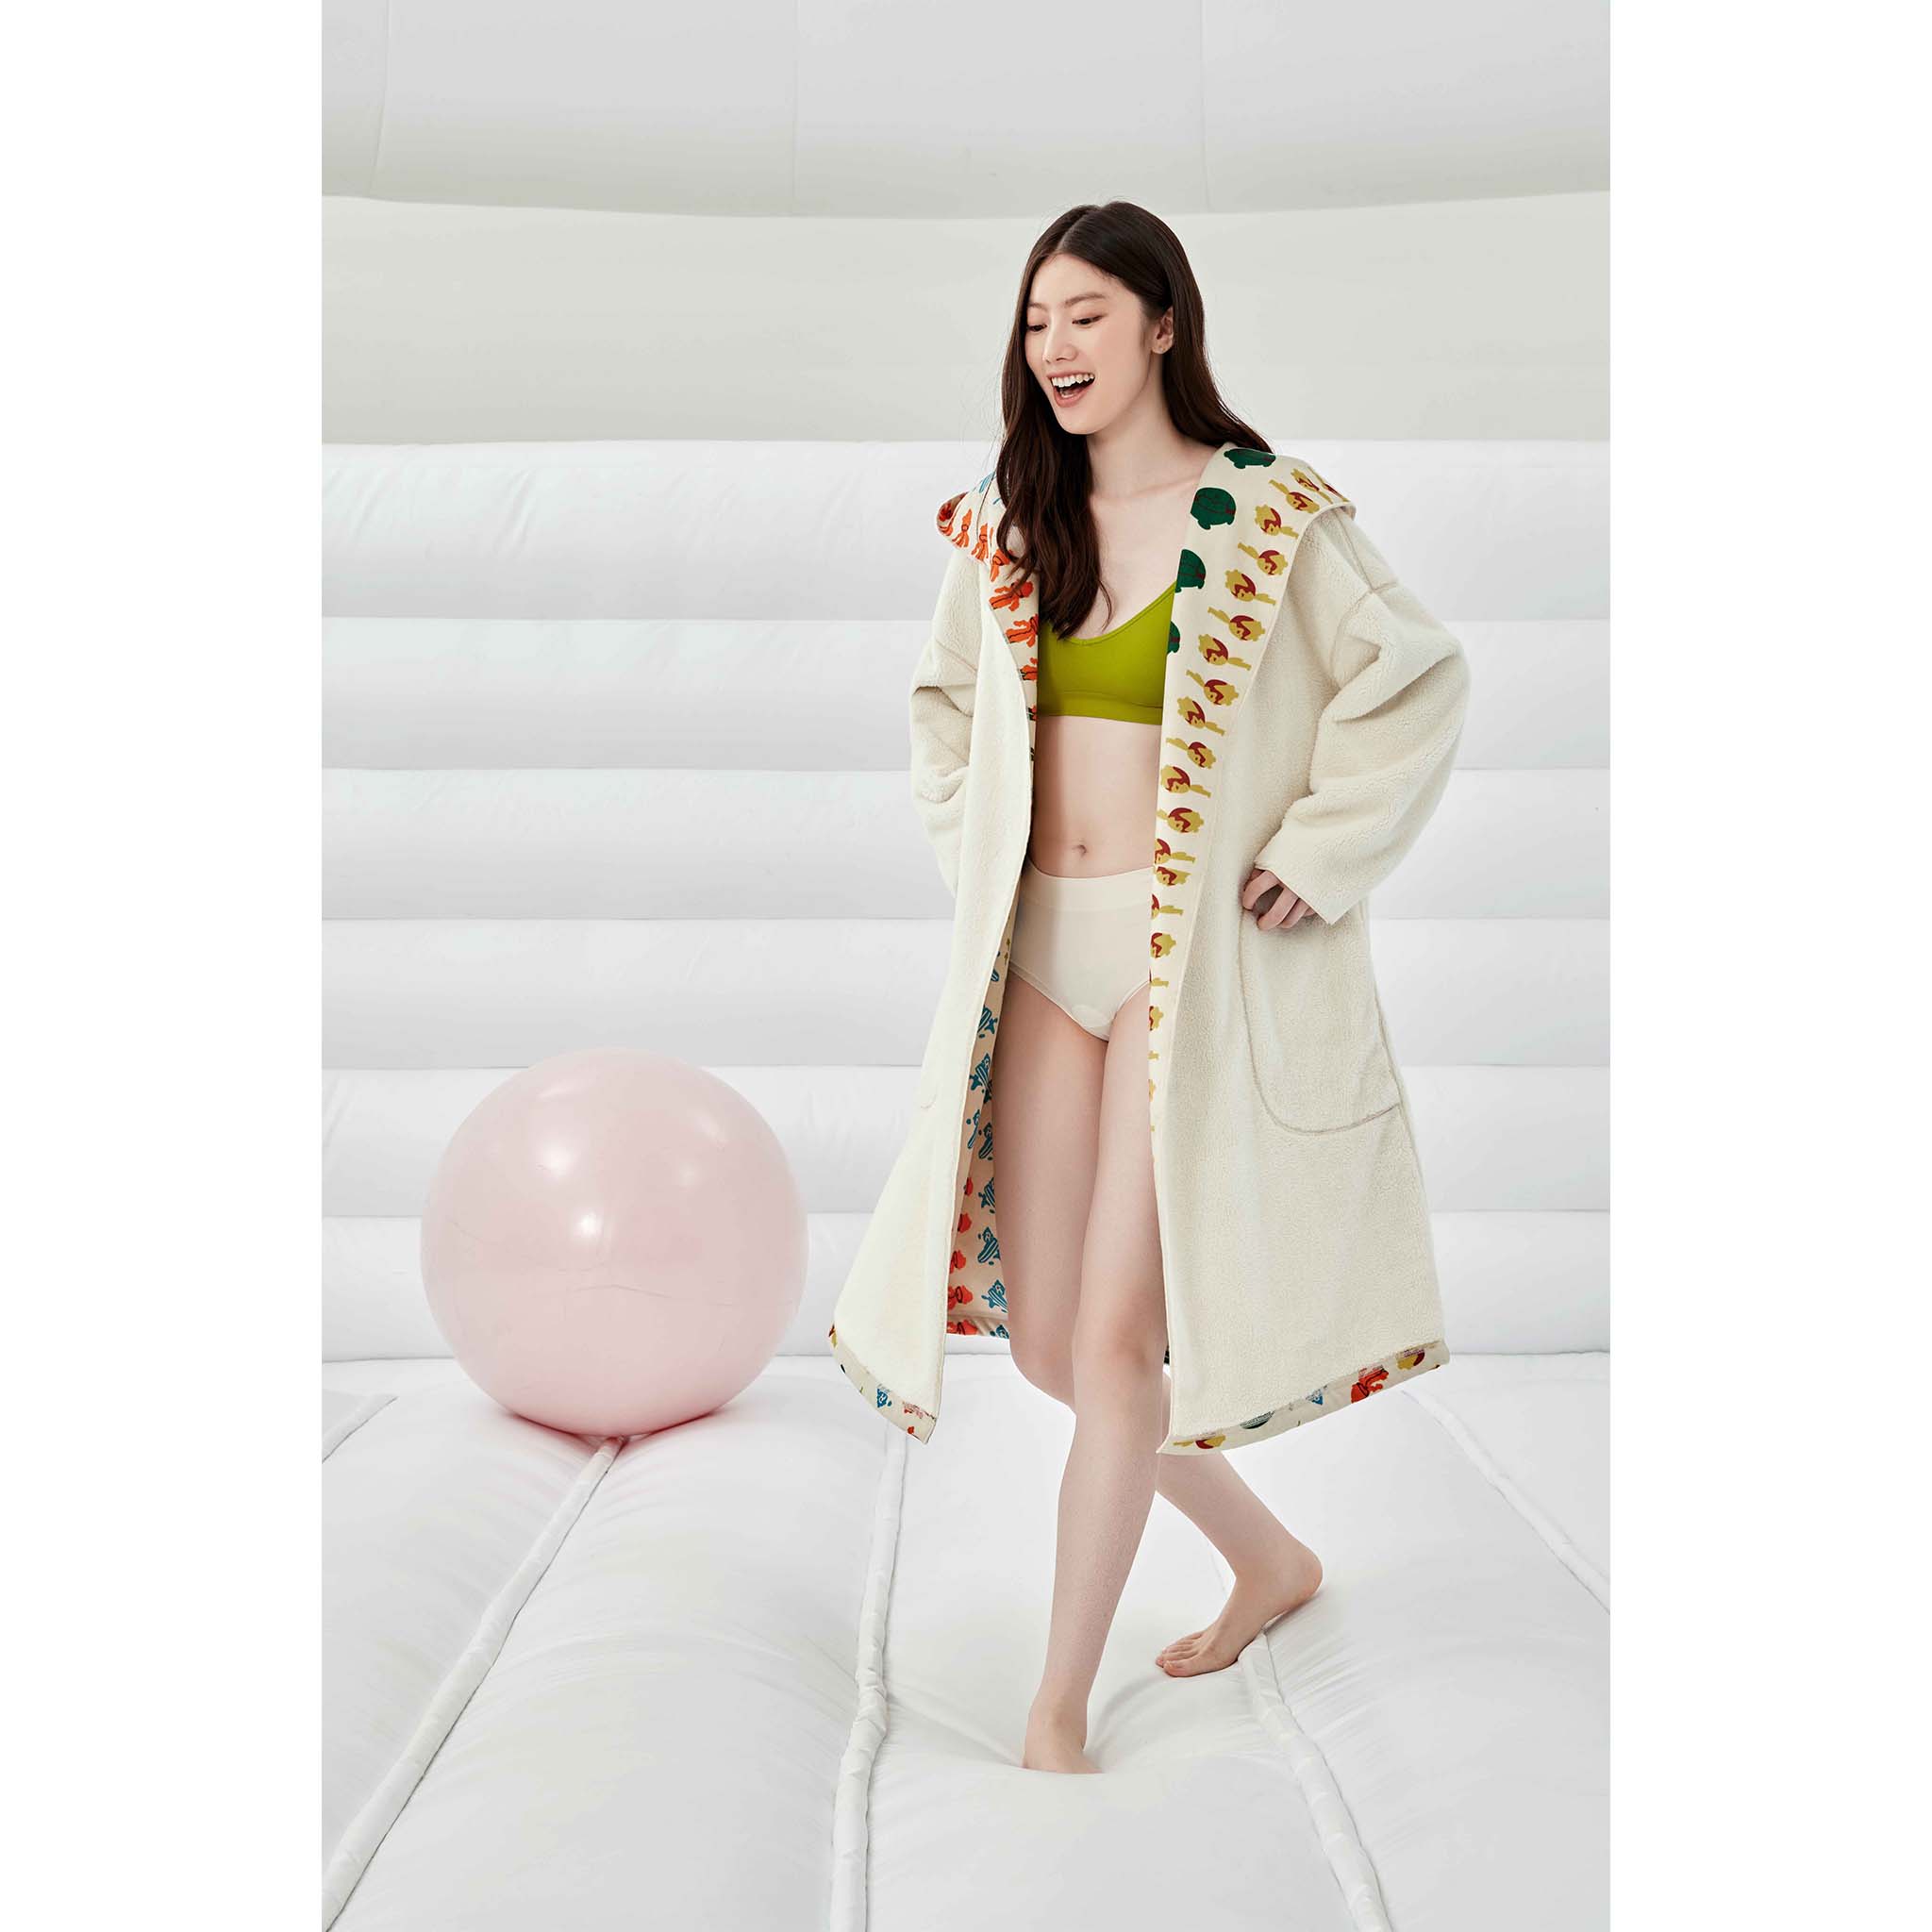 Compfy Dual Fleece Unisex Loungewear | Fluffy Gown Bath Robe | Reversible Design